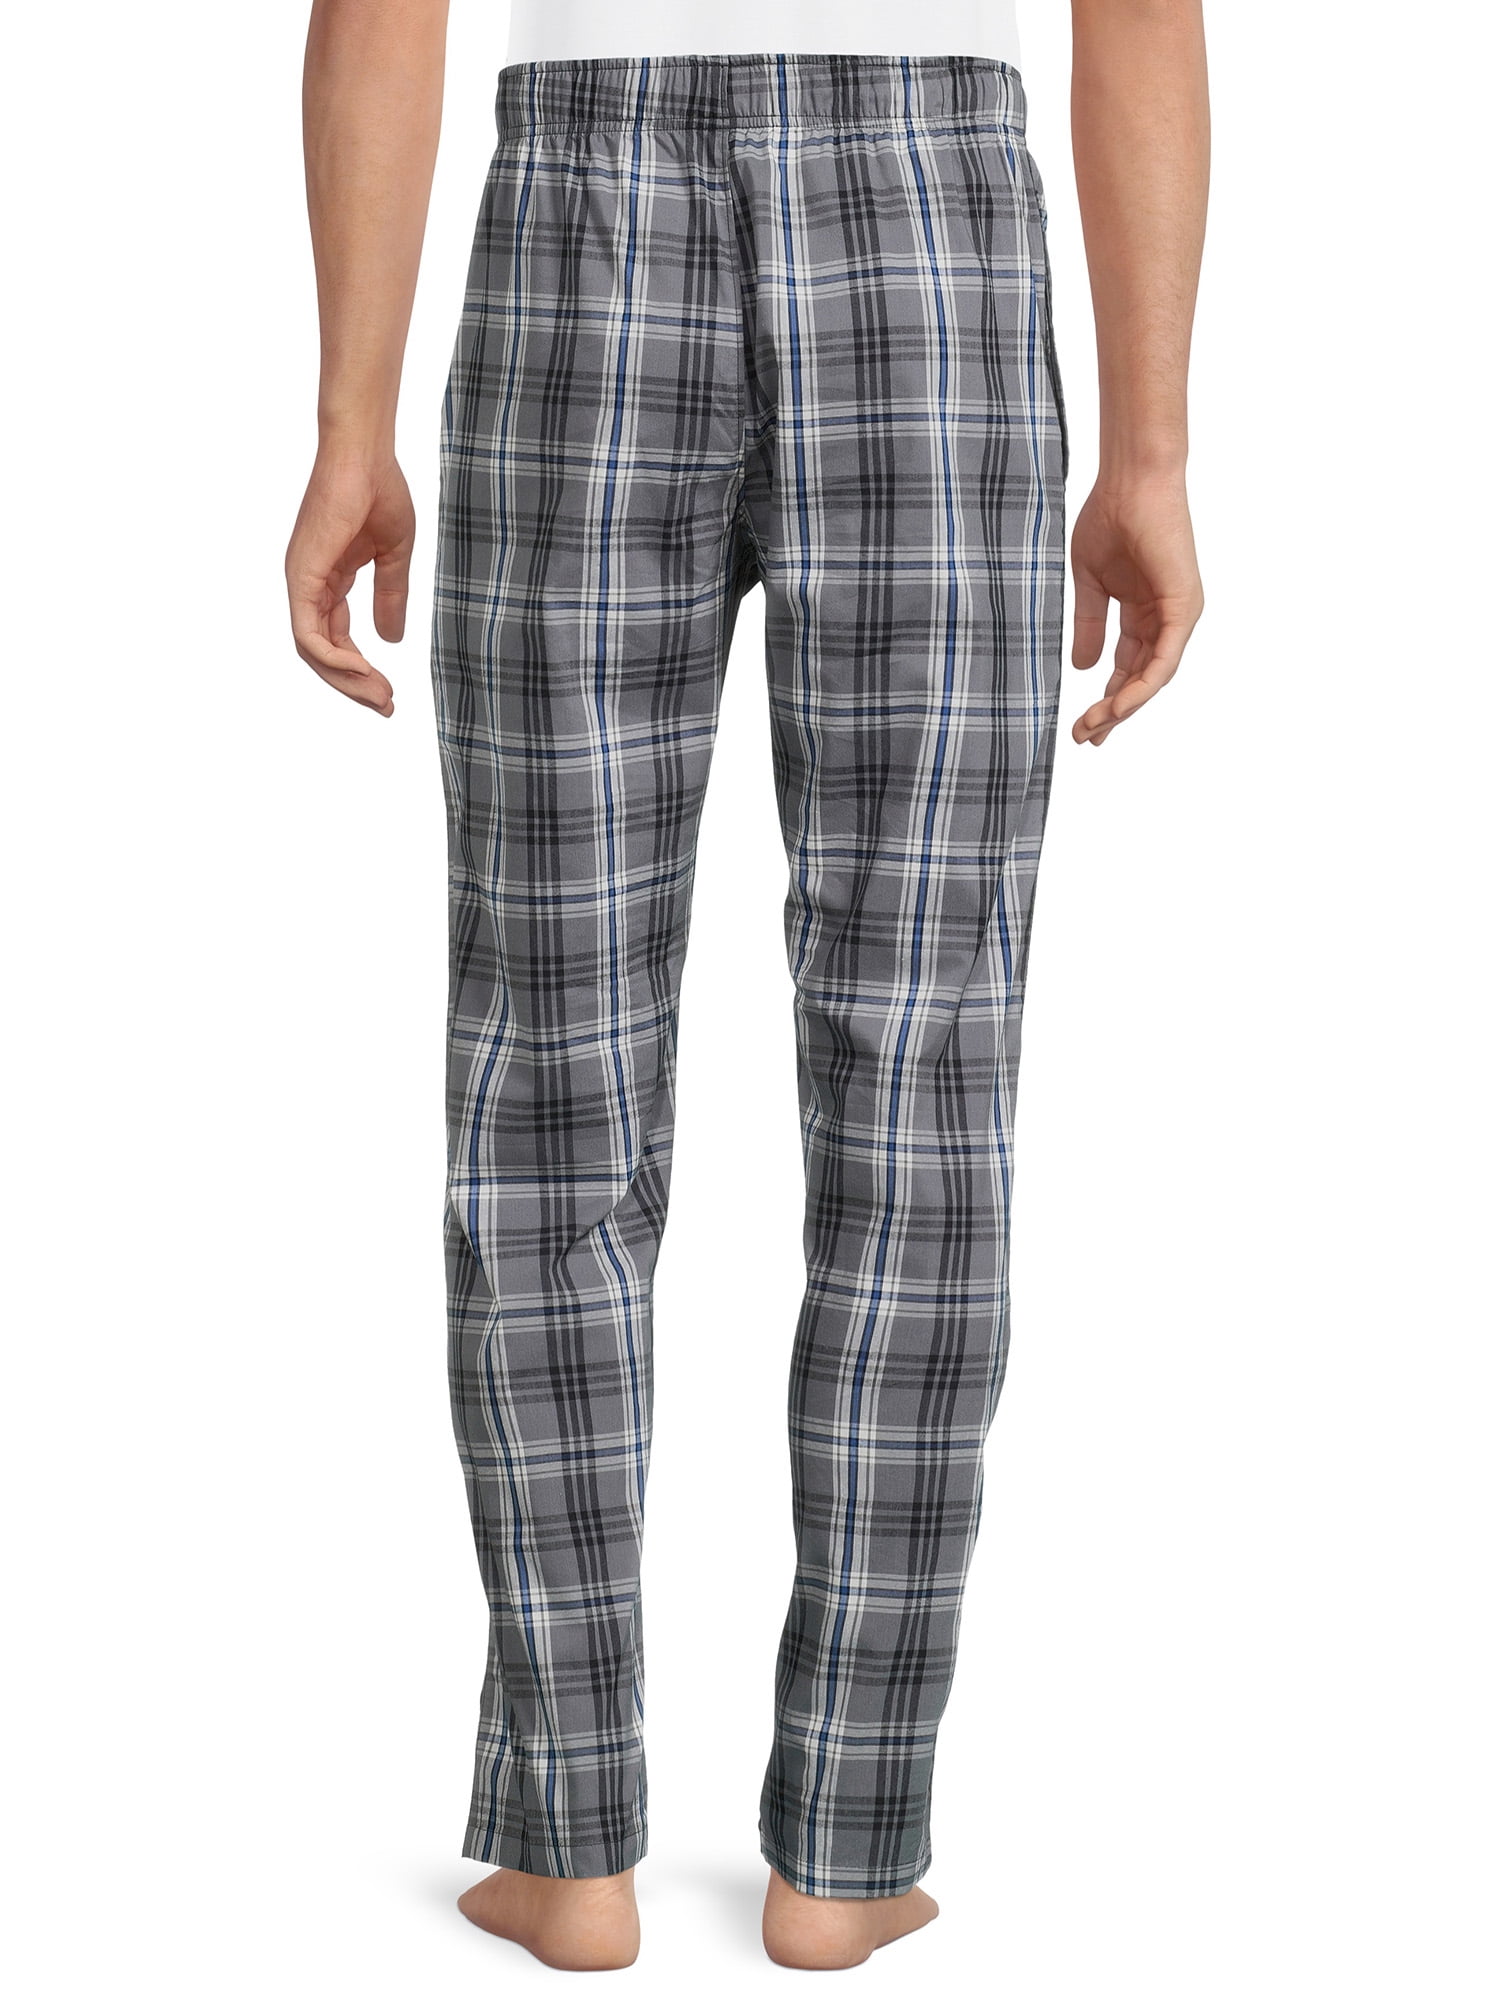 Hanes Men's Woven Sleep Pants, Size S-2XL